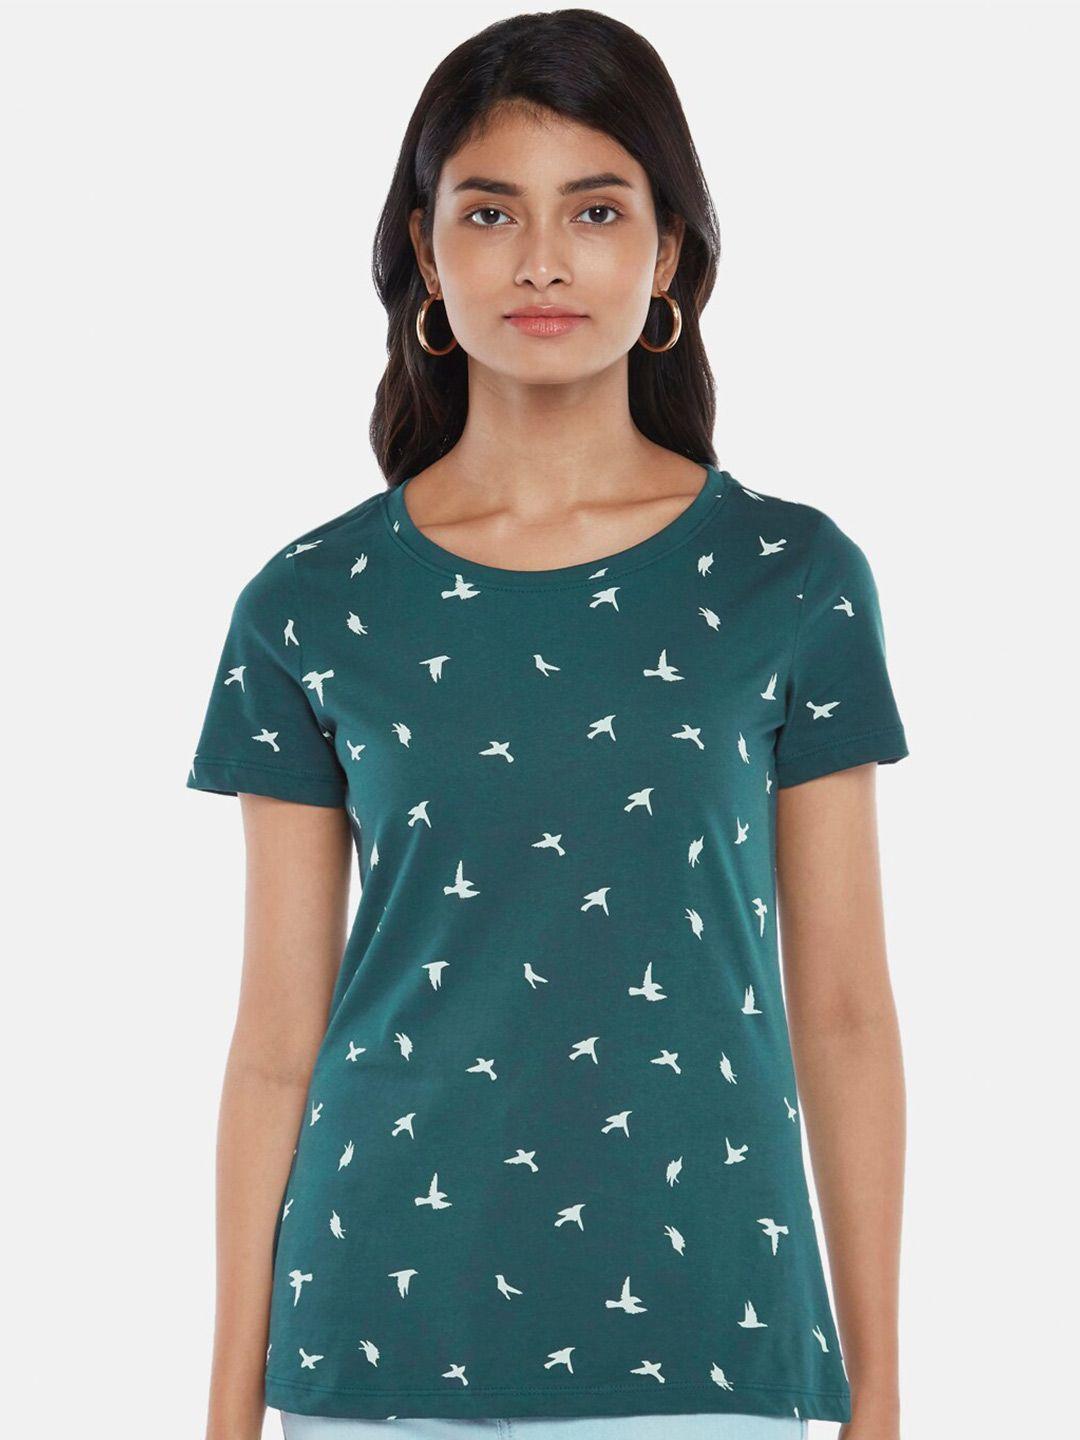 honey-by-pantaloons-women-teal-printed-t-shirt